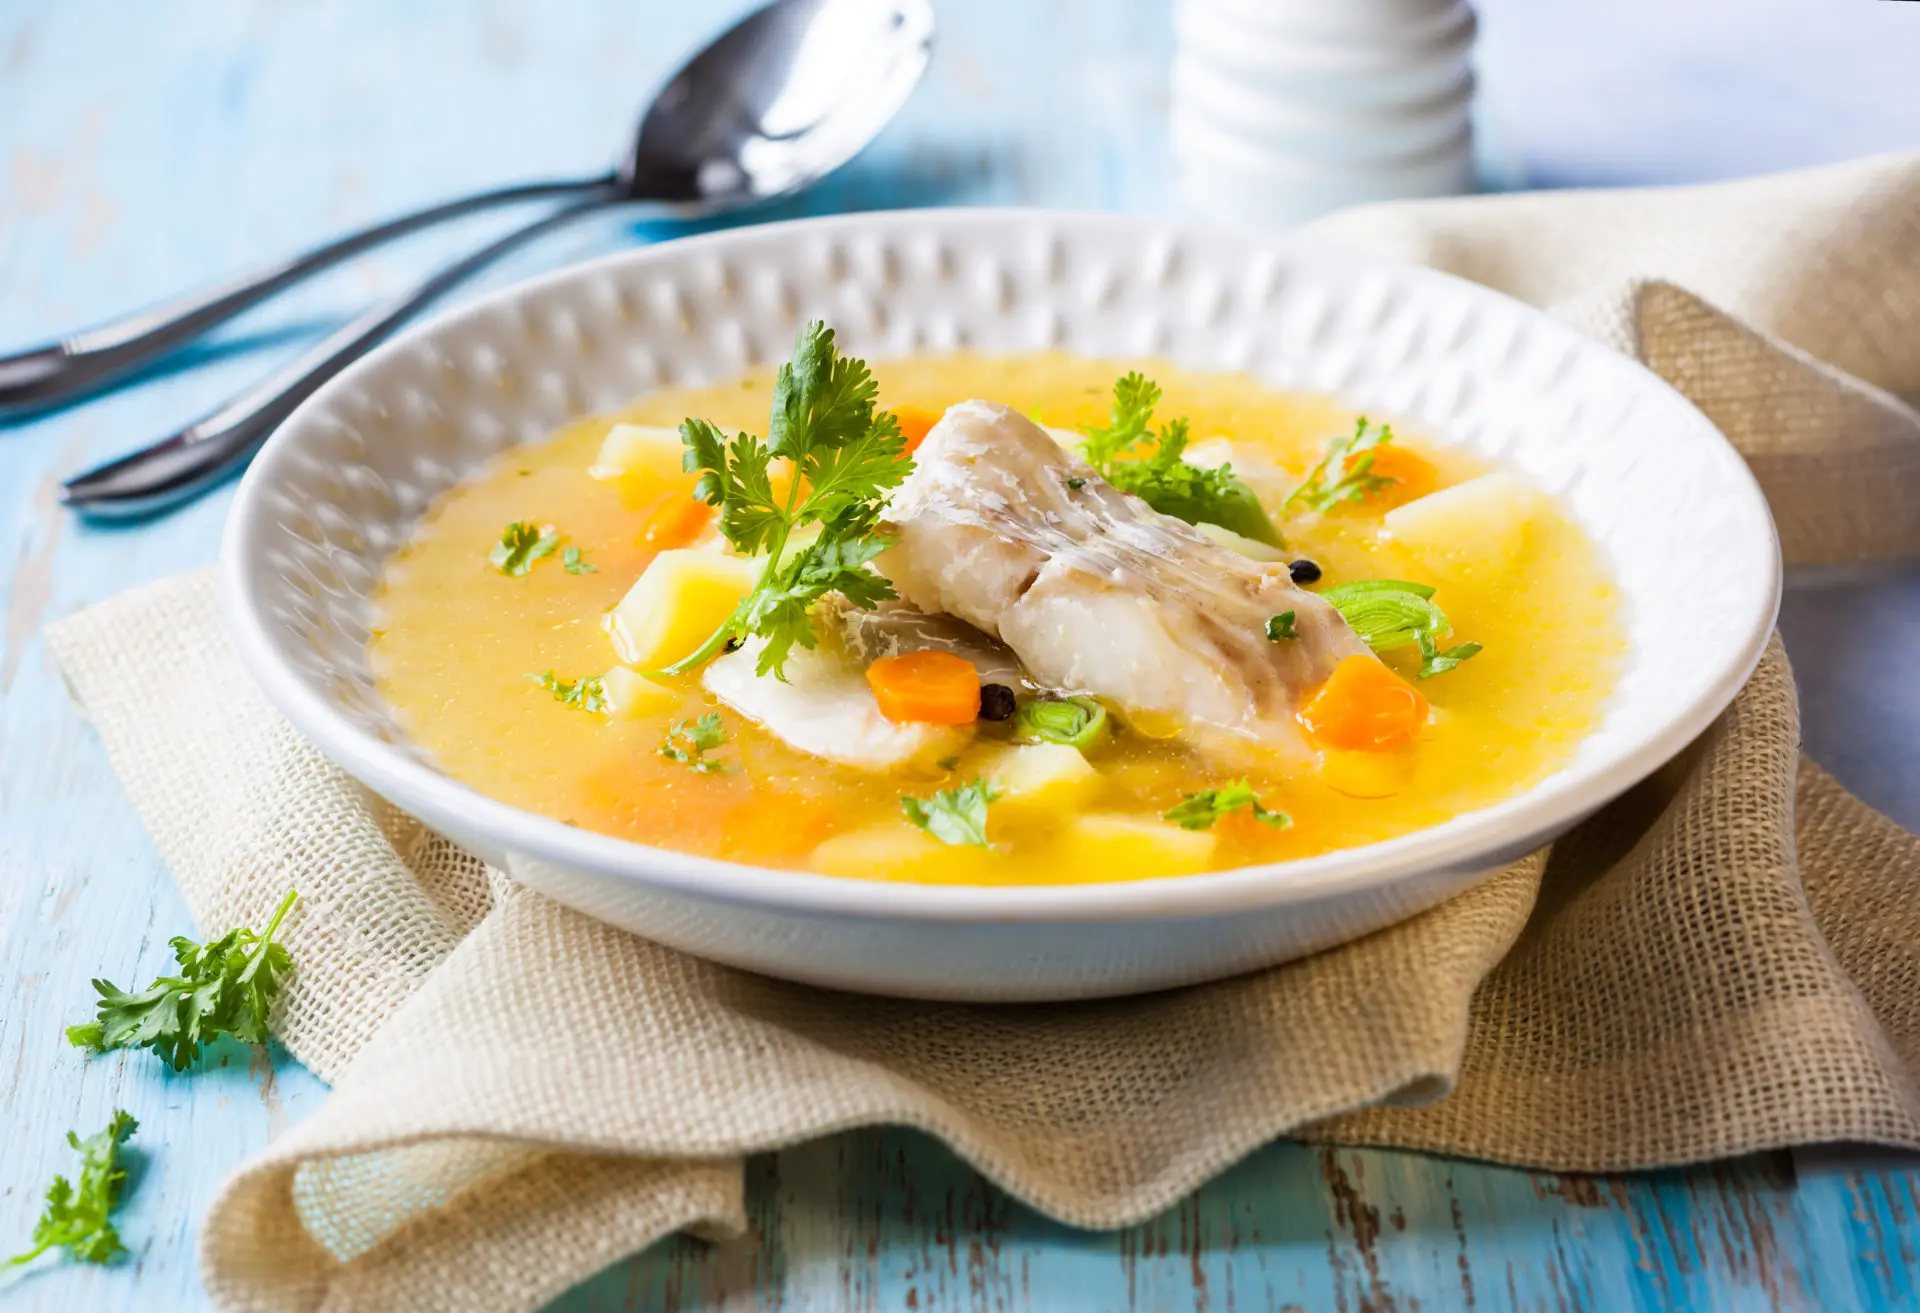 Psarosoupa or Fish soup